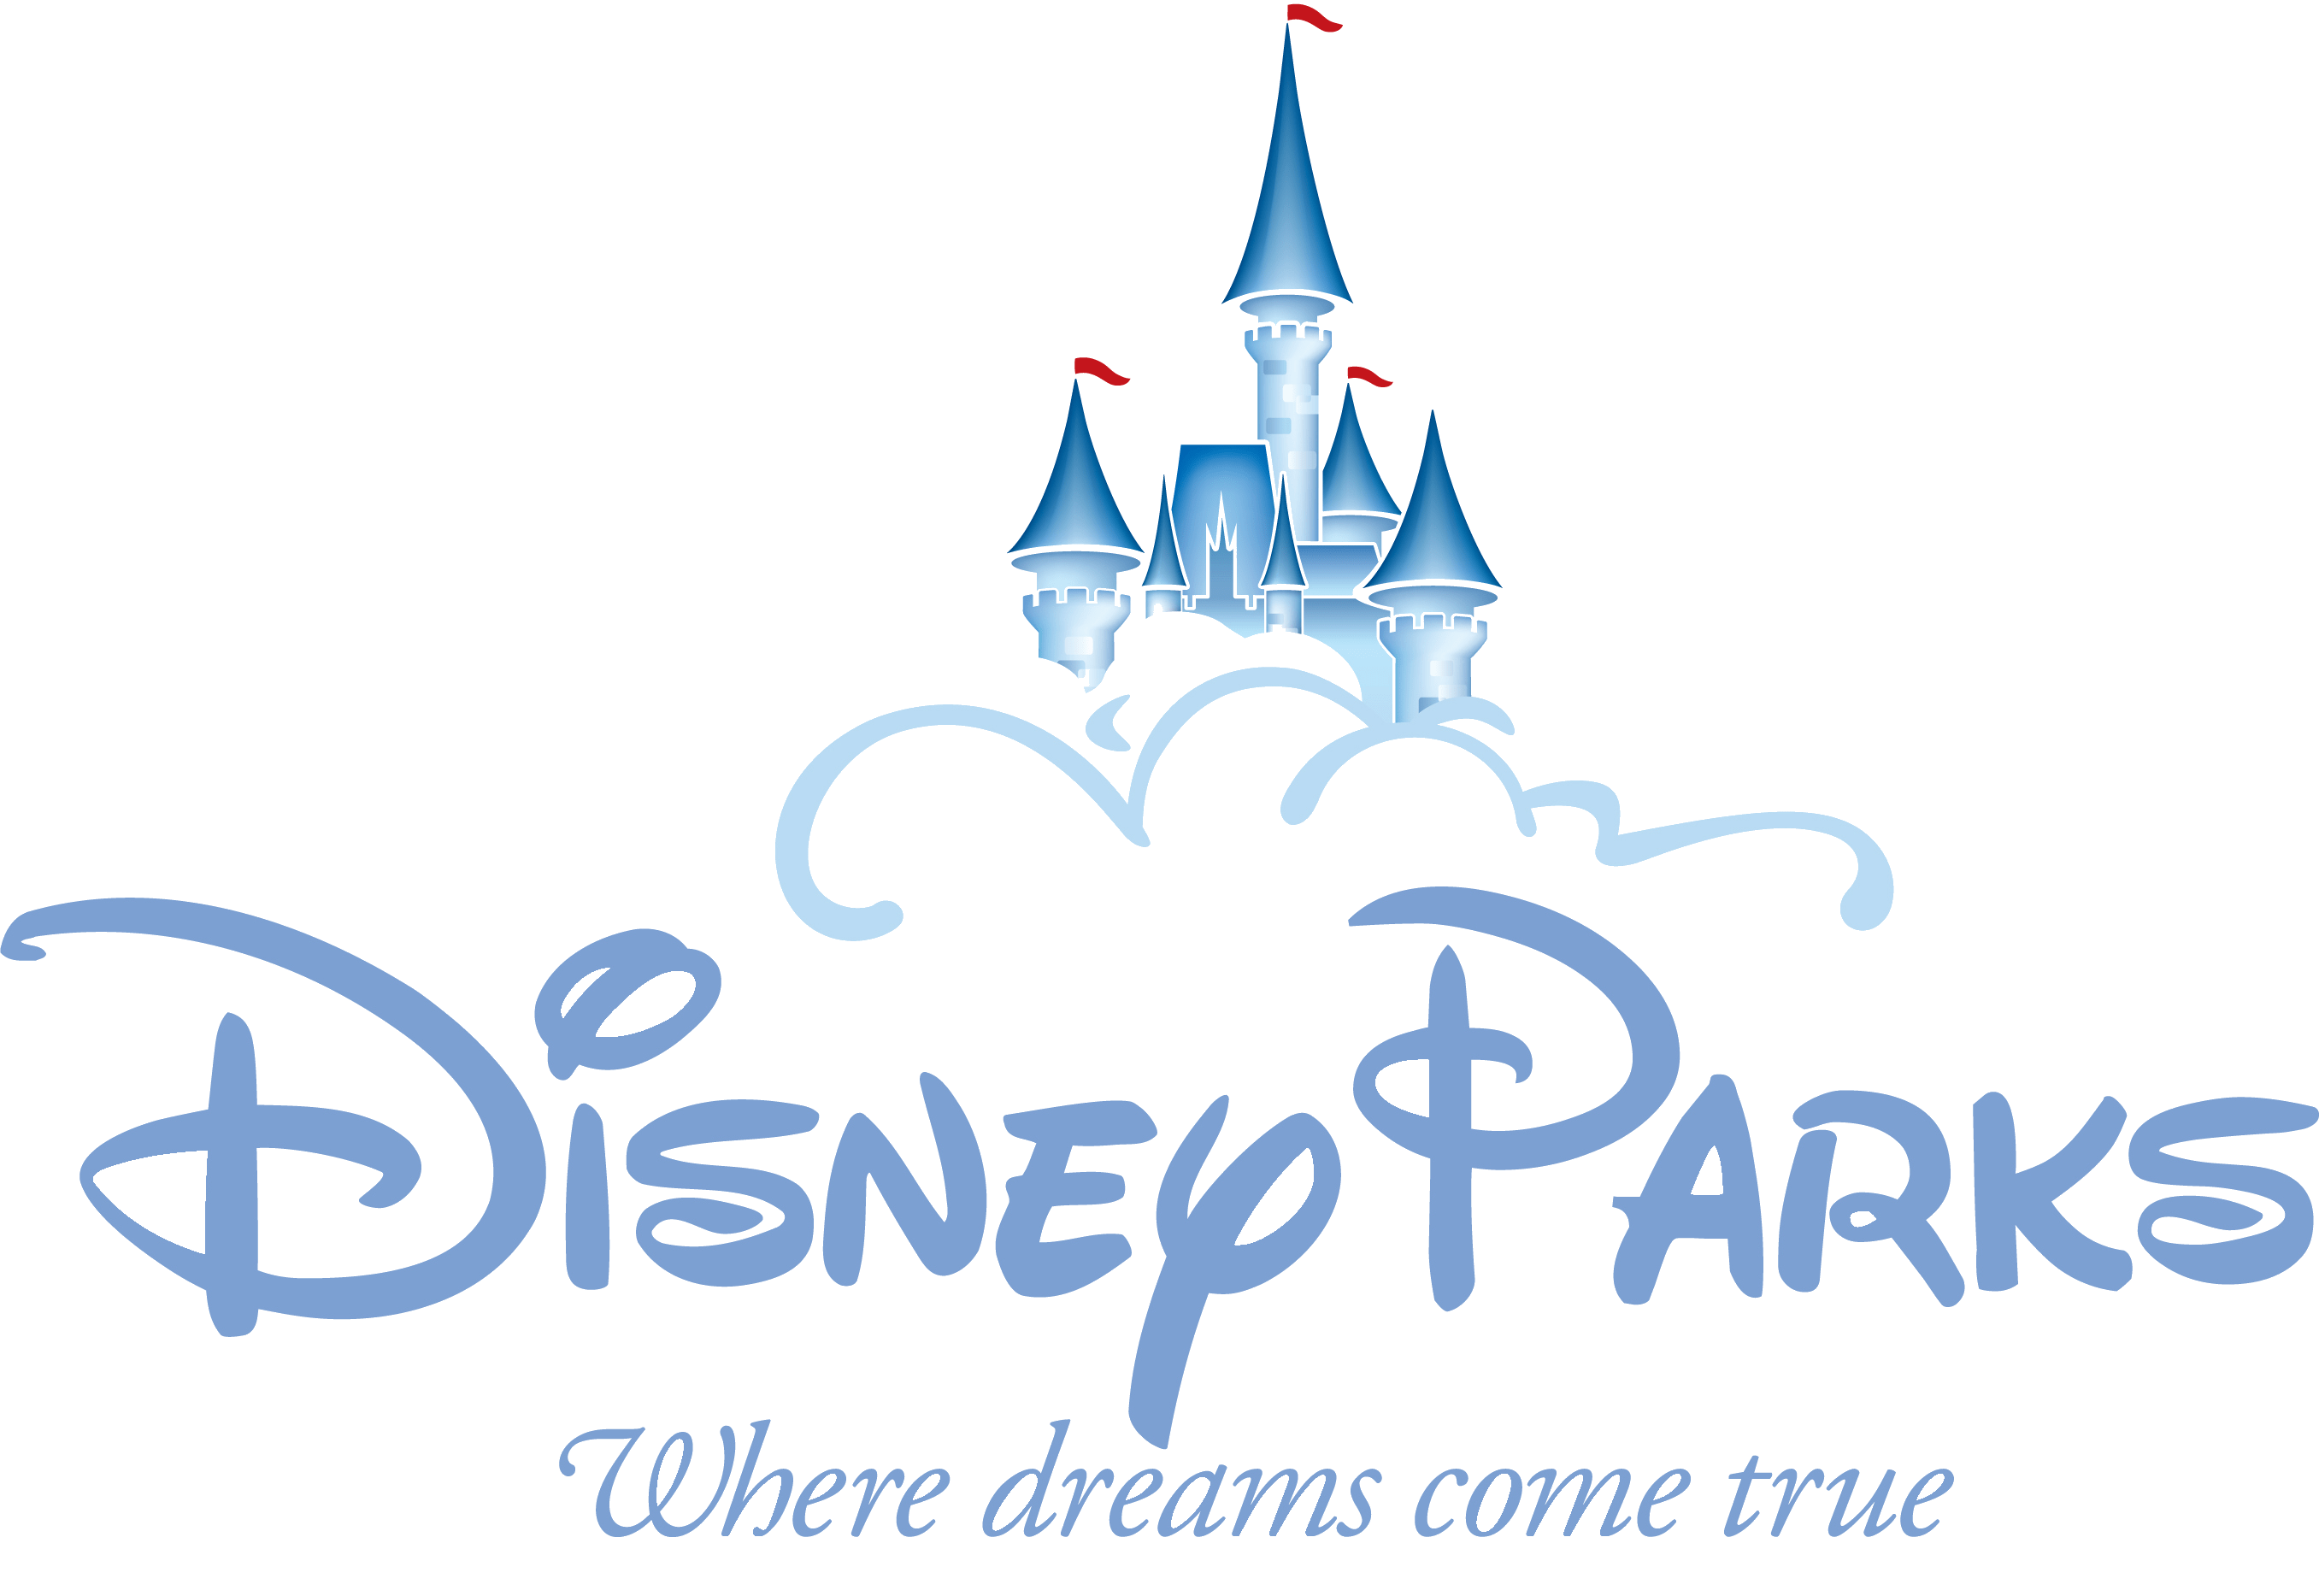 Disneyland Park Logo - Disney parks Logos